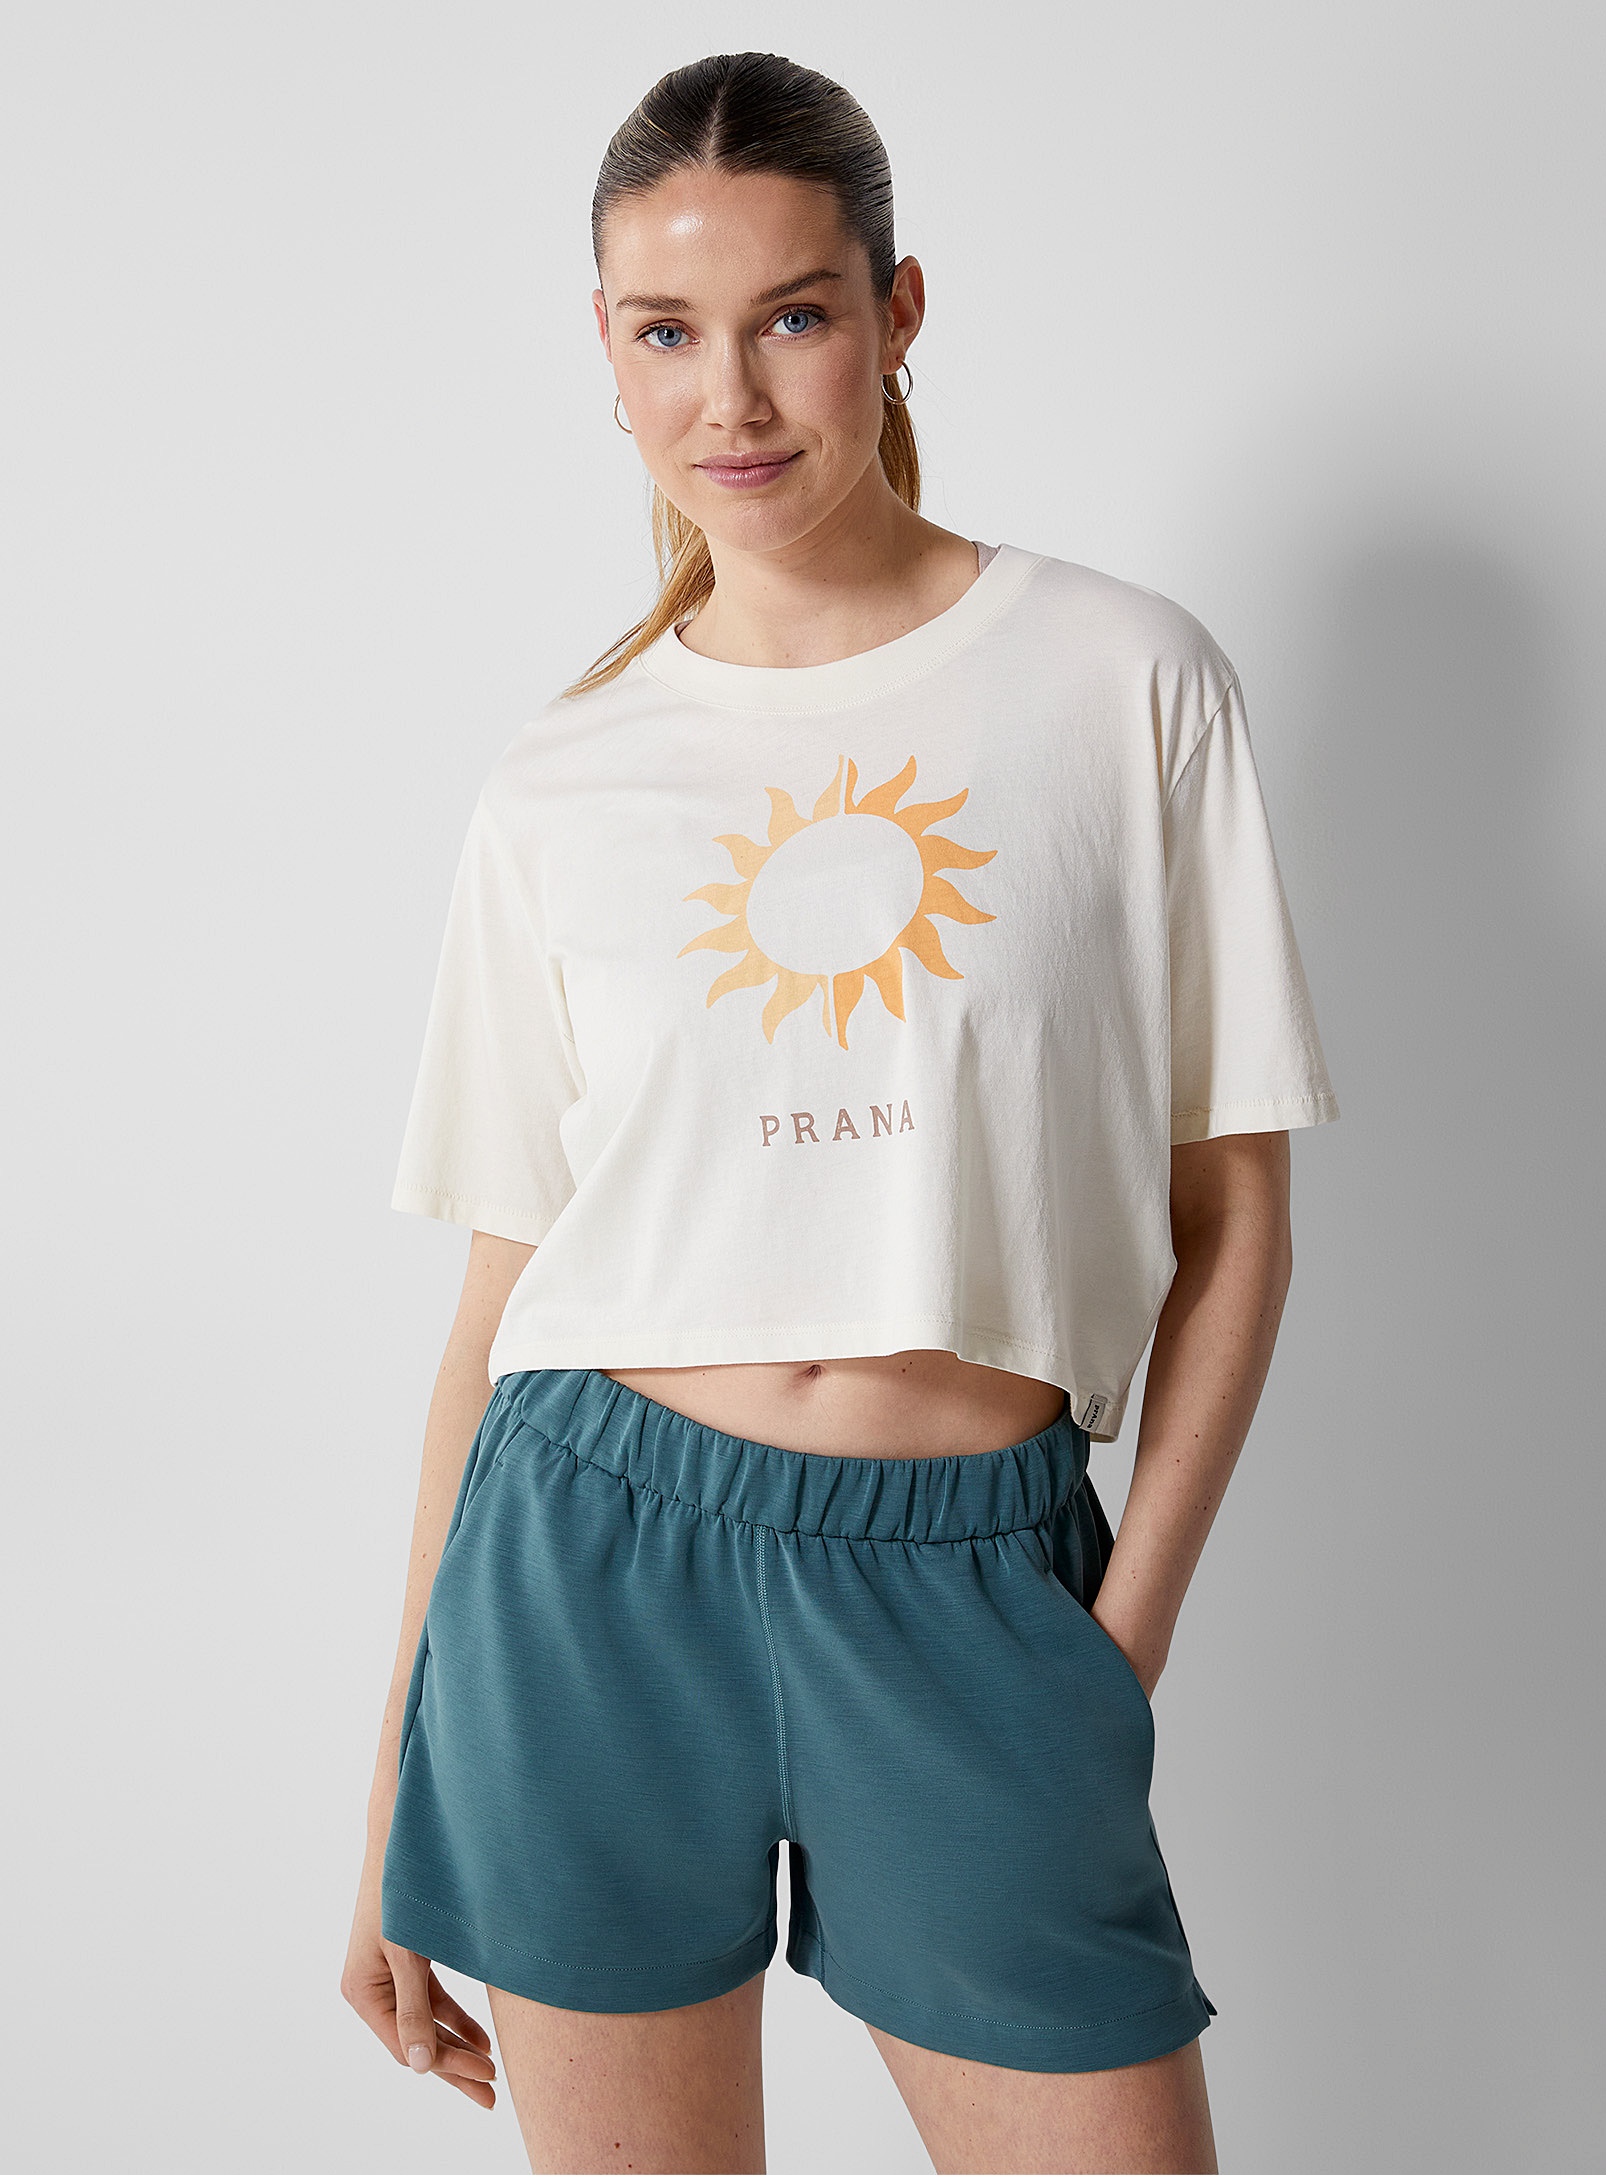 Prana - Women's Sun cropped boxy Tee Shirt